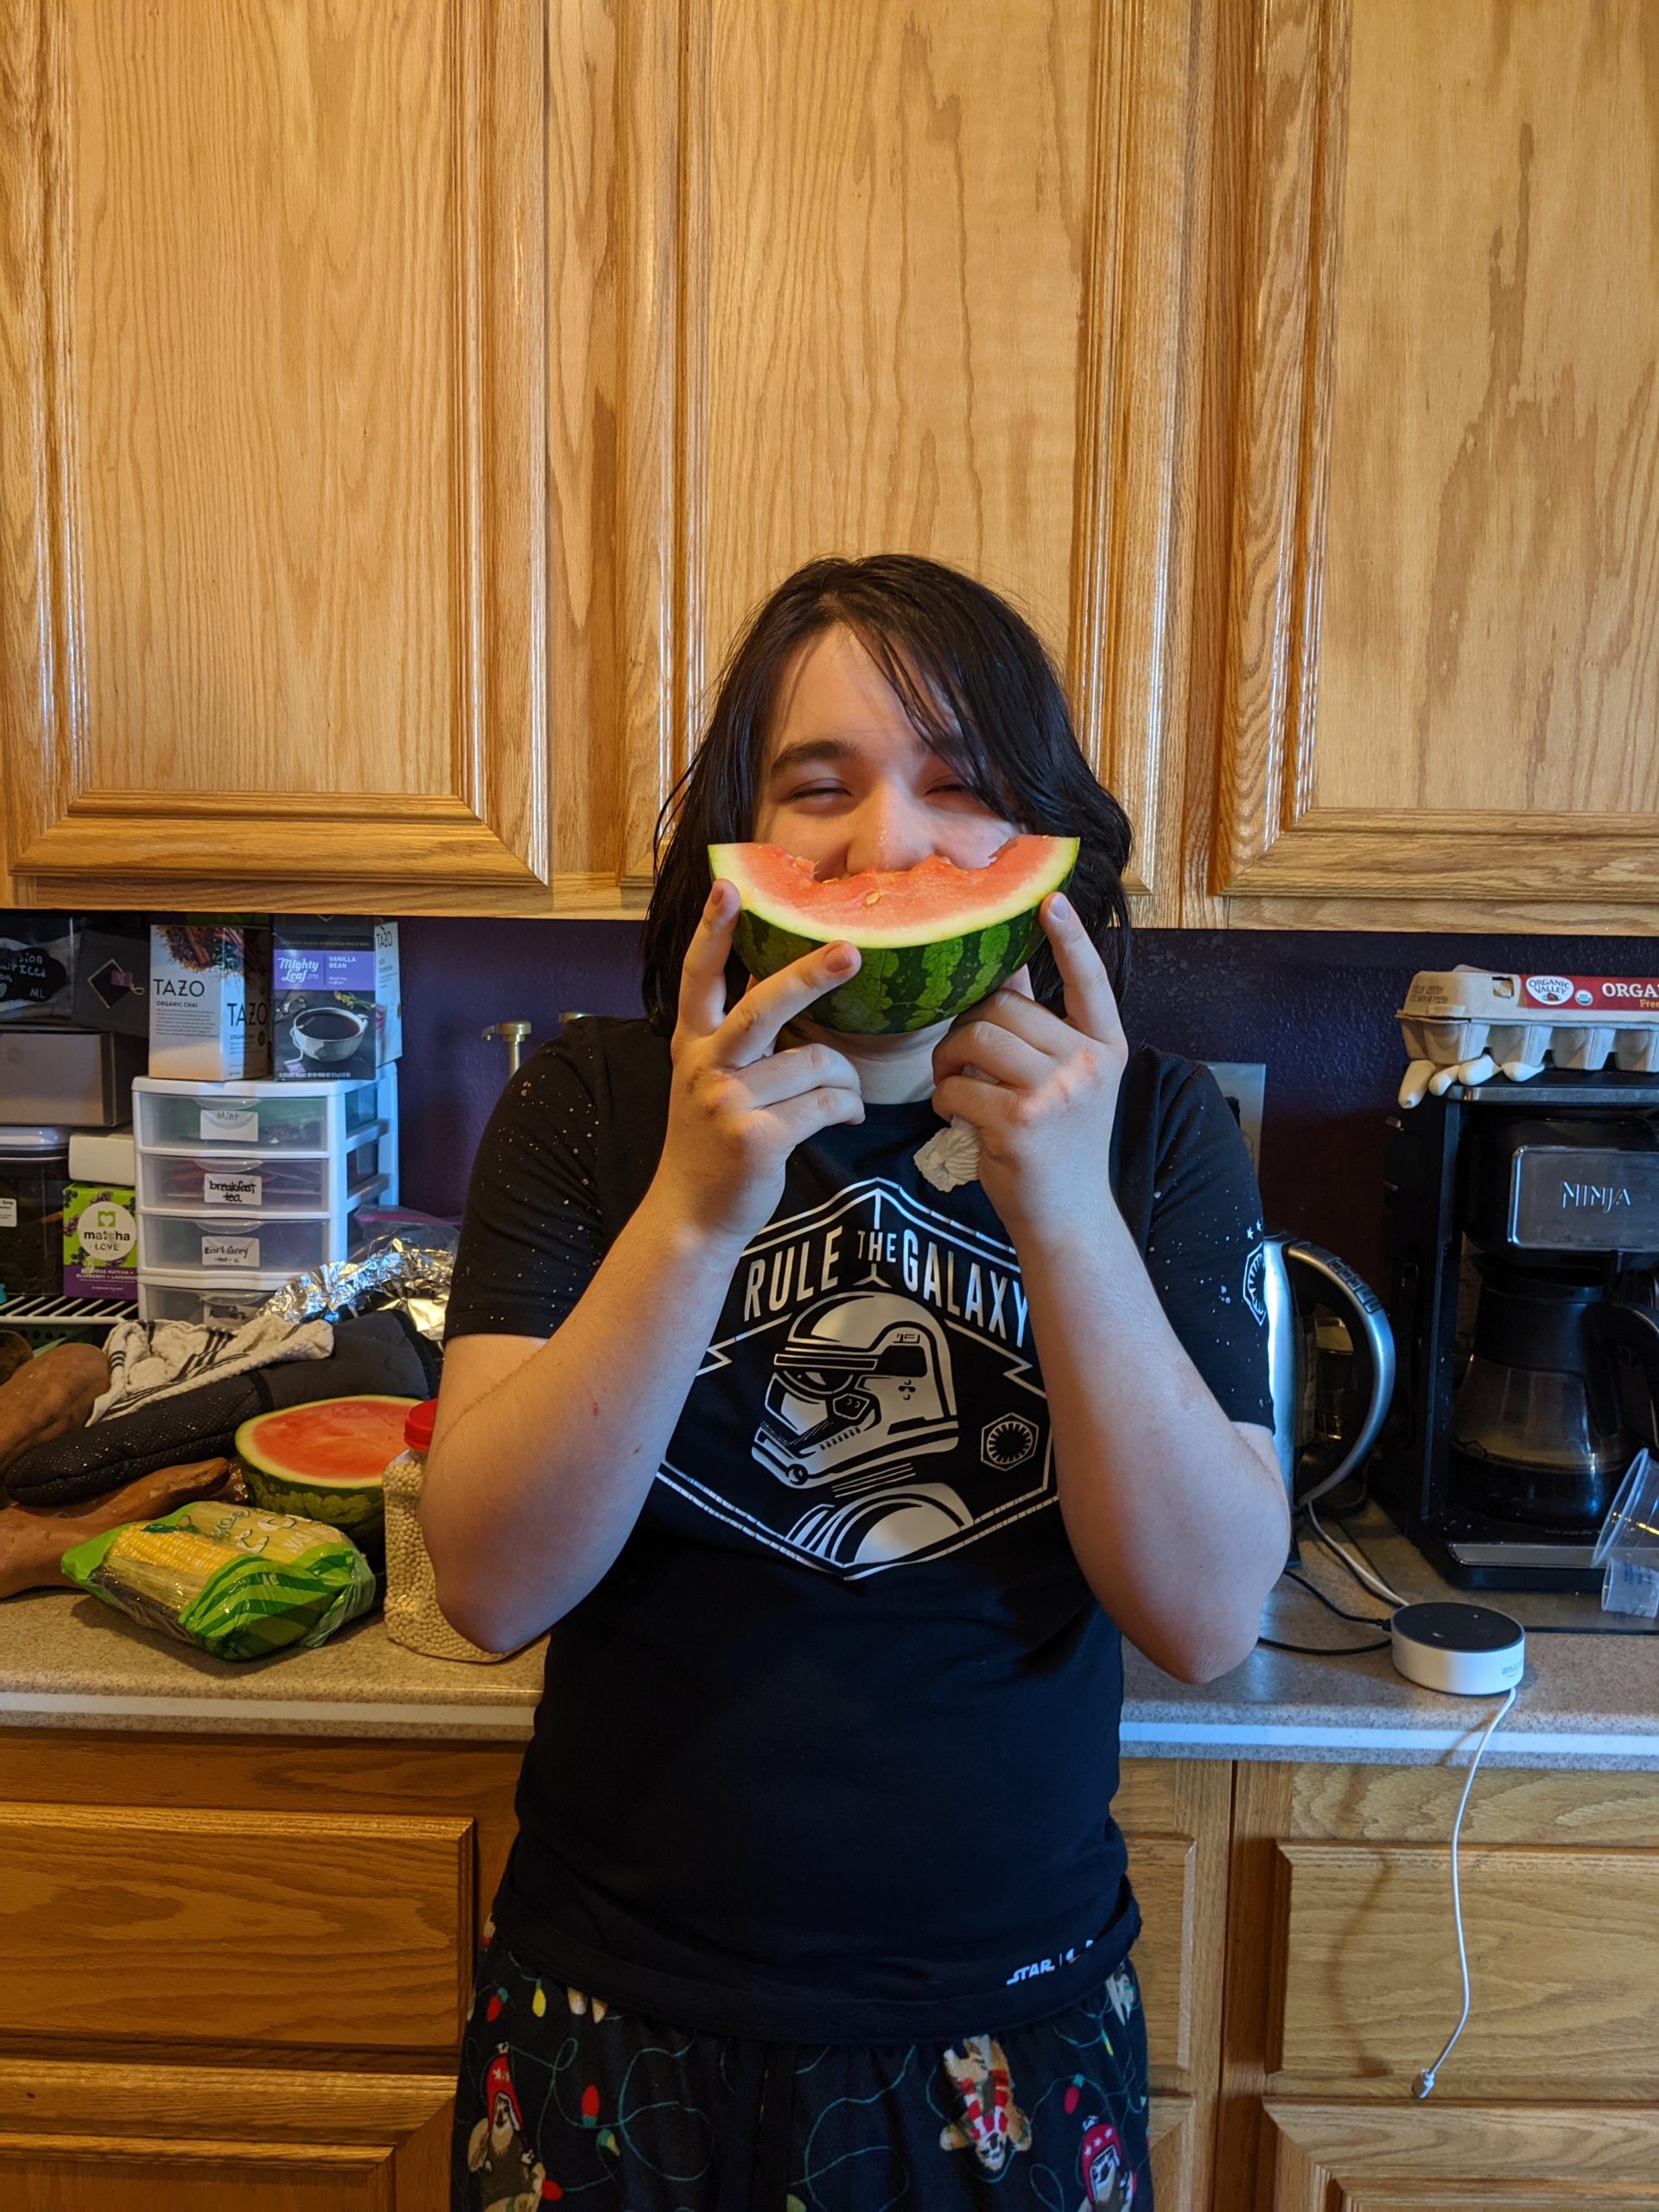 Watermelon smiles!